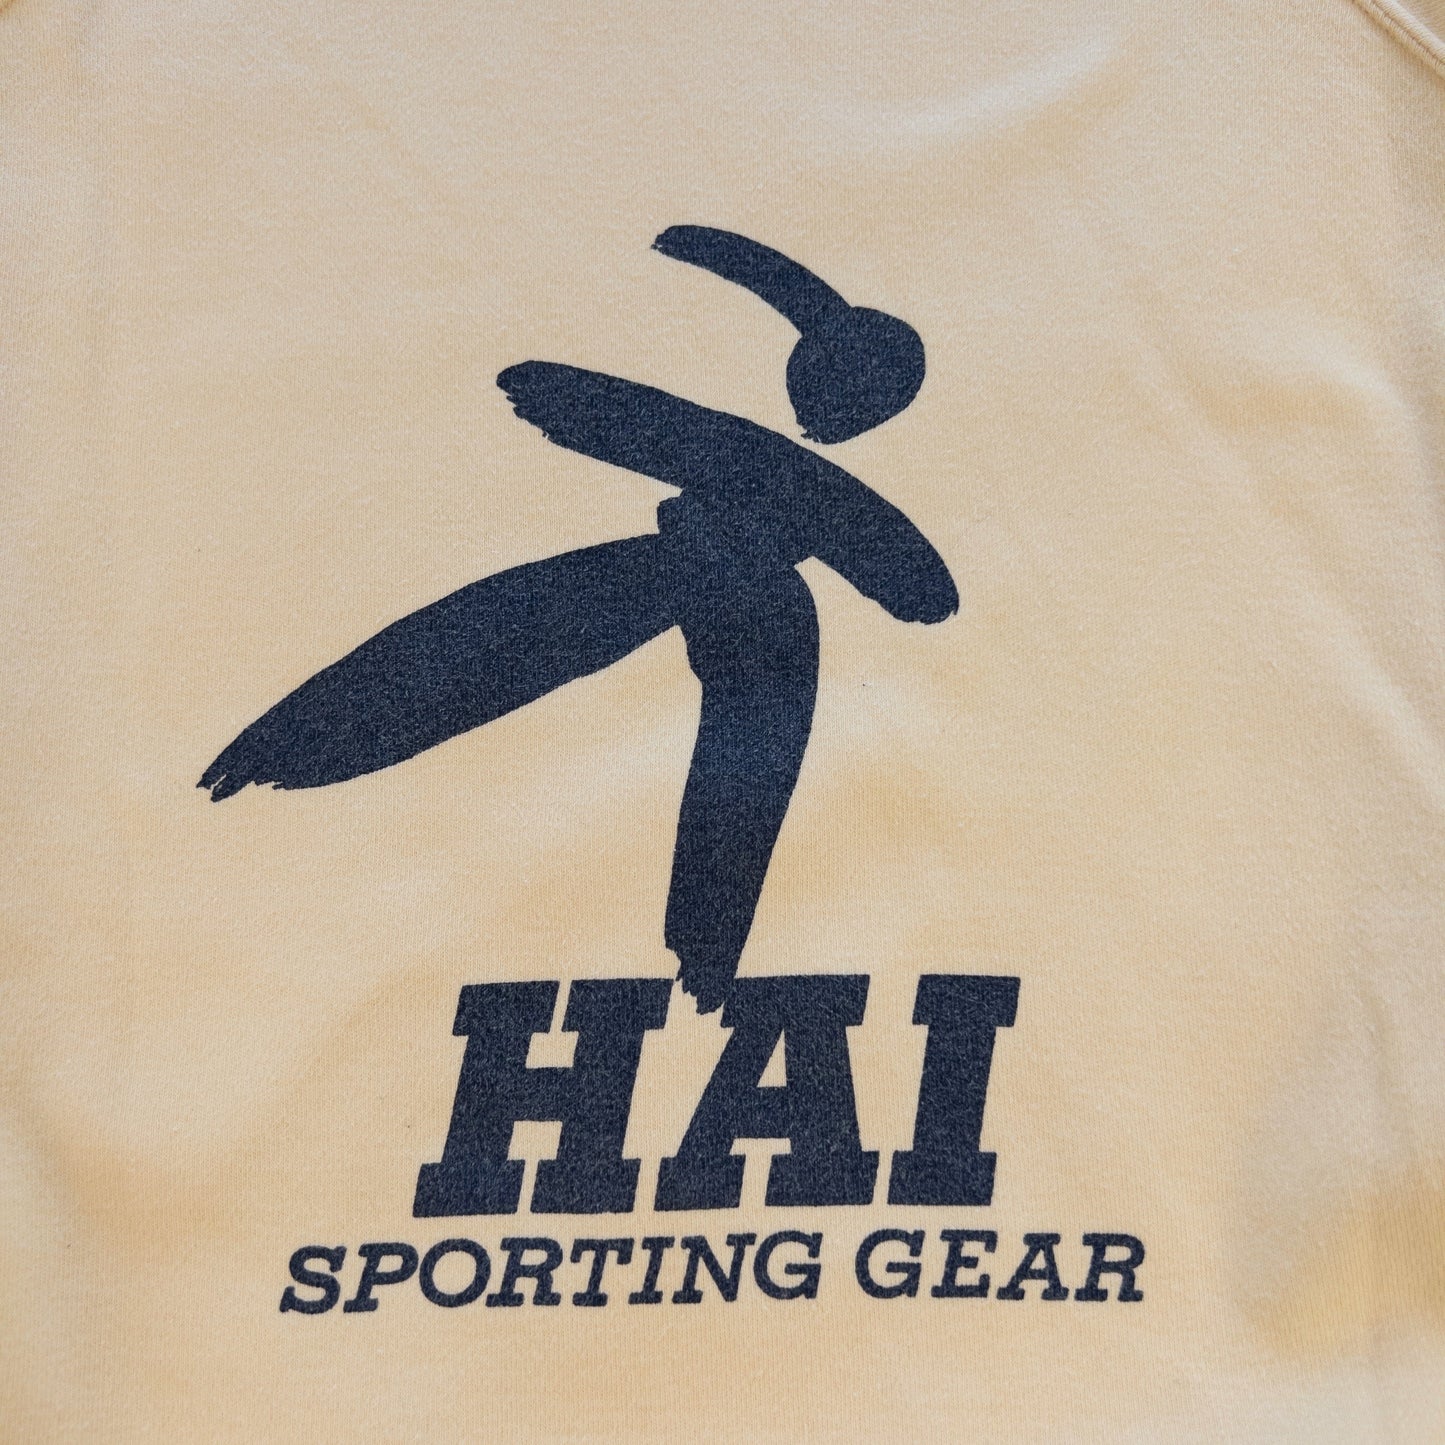 Vintage Hai Clothing By Issey Miyake Sweatshirt Size S